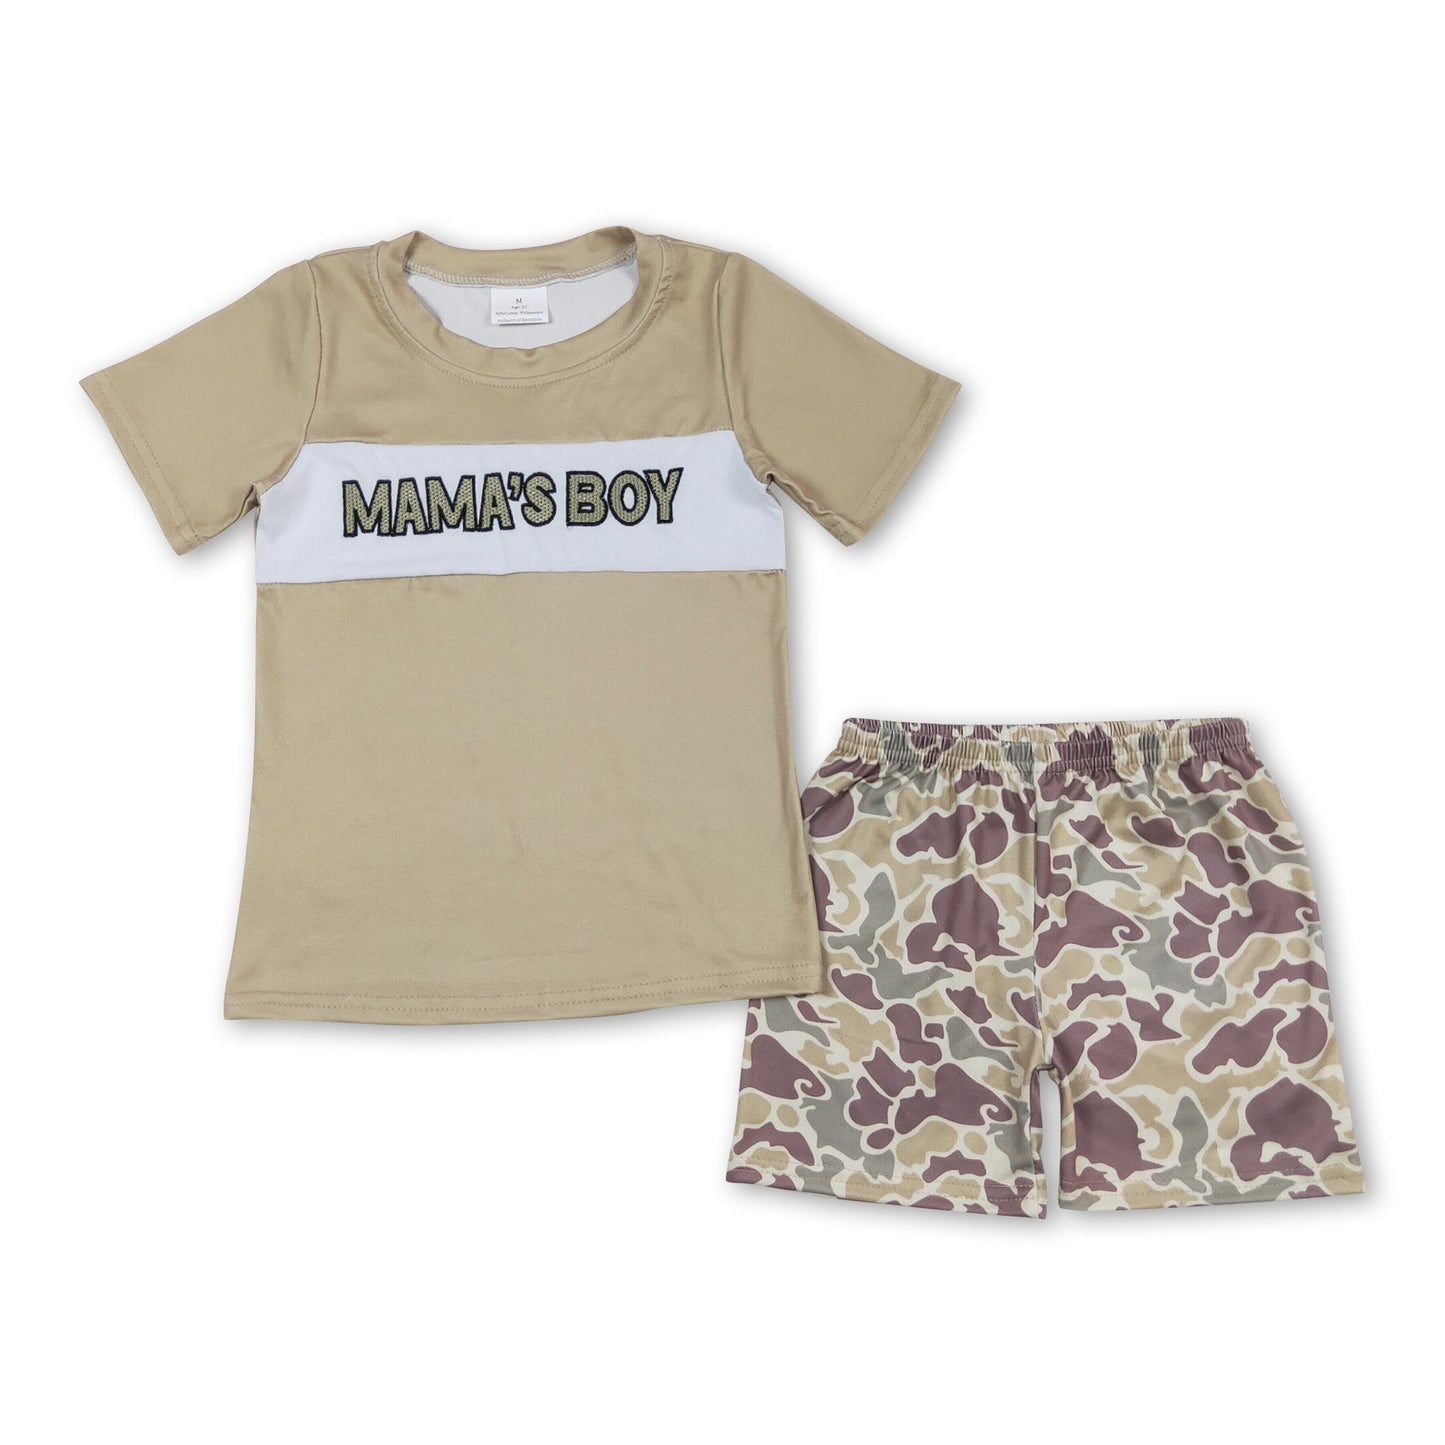 Mama's boy camo shirt shorts kids summer clothes